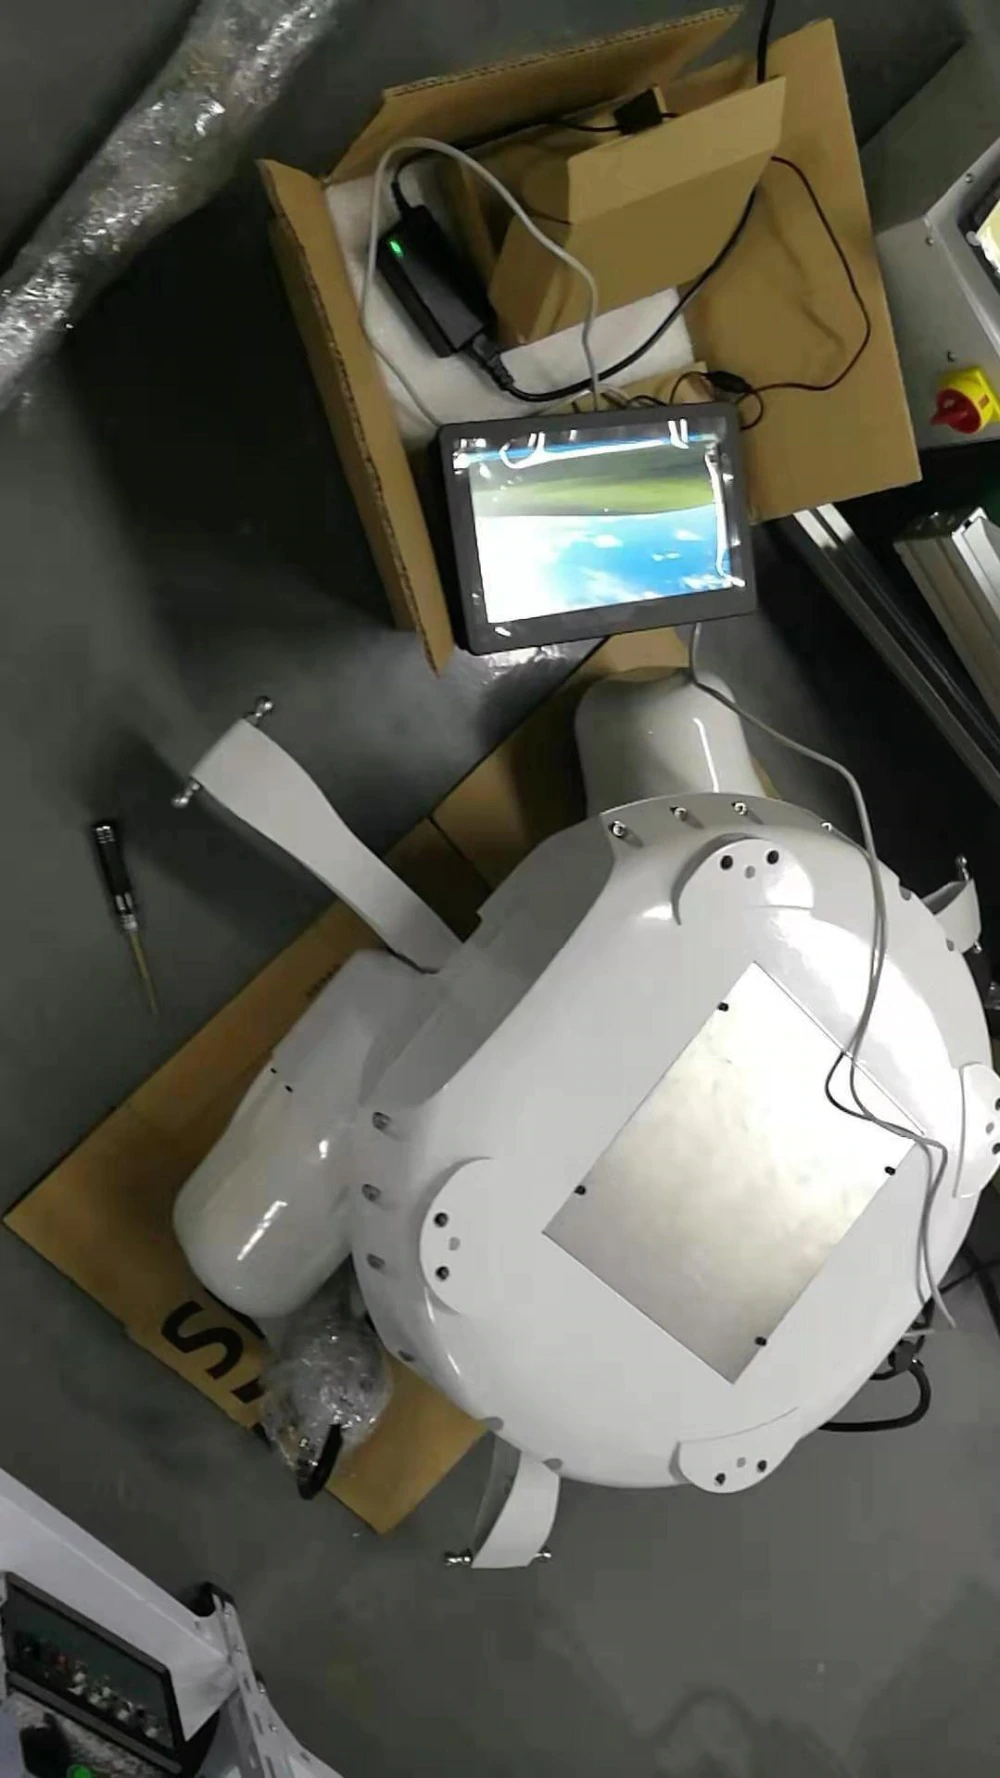 Delta-Roboter